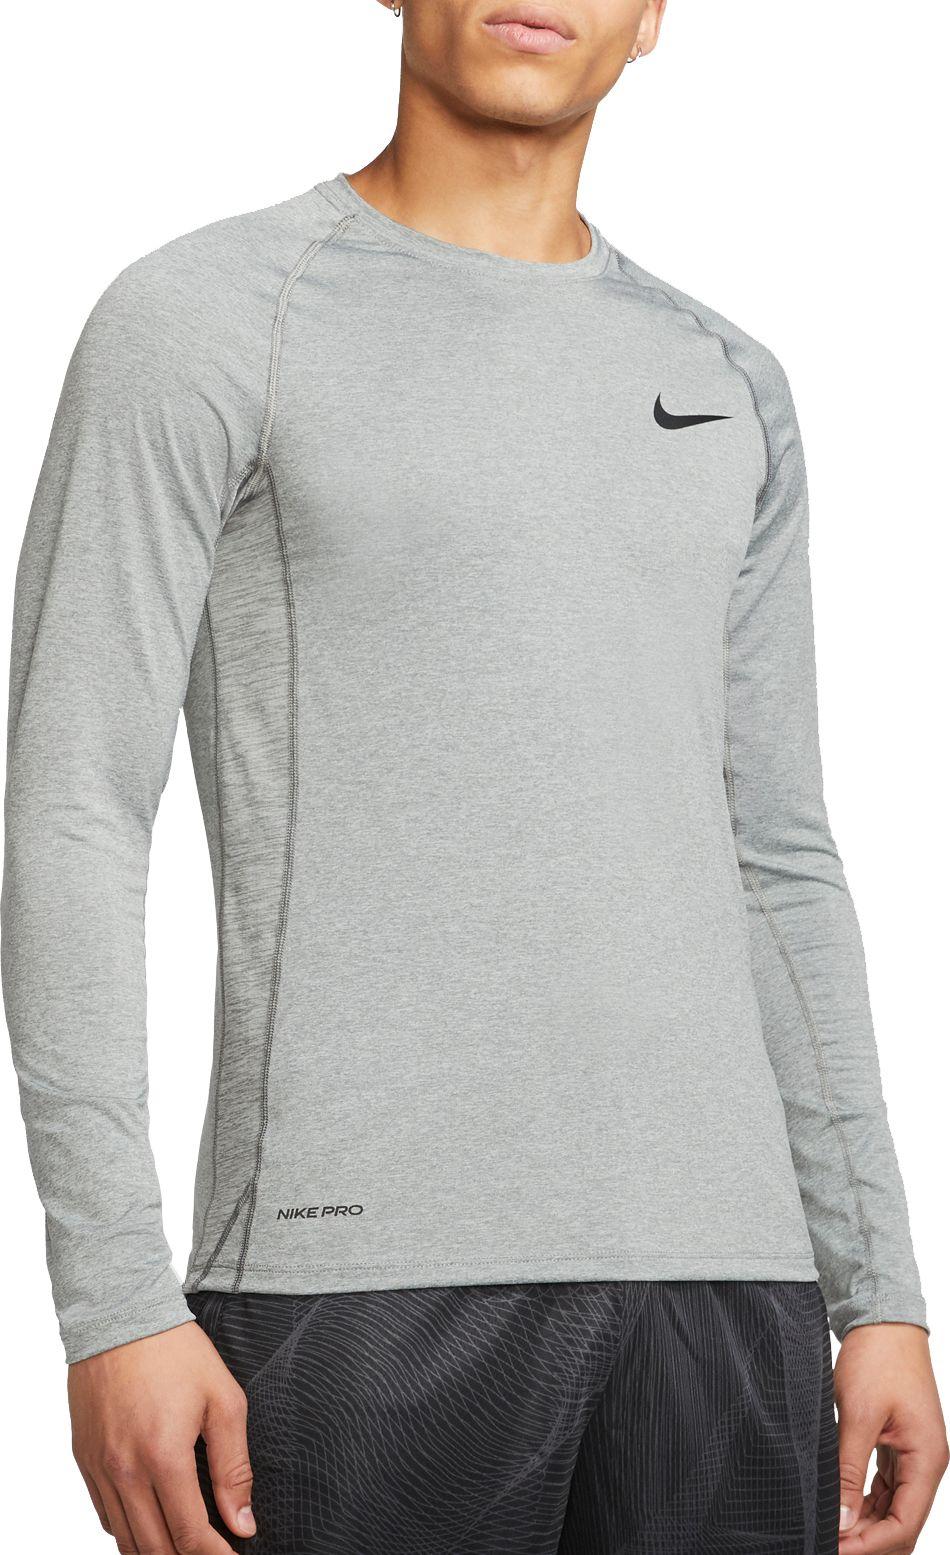 Nike Pro Slim Fit Long Sleeve Shirt in Gray for Men - Lyst